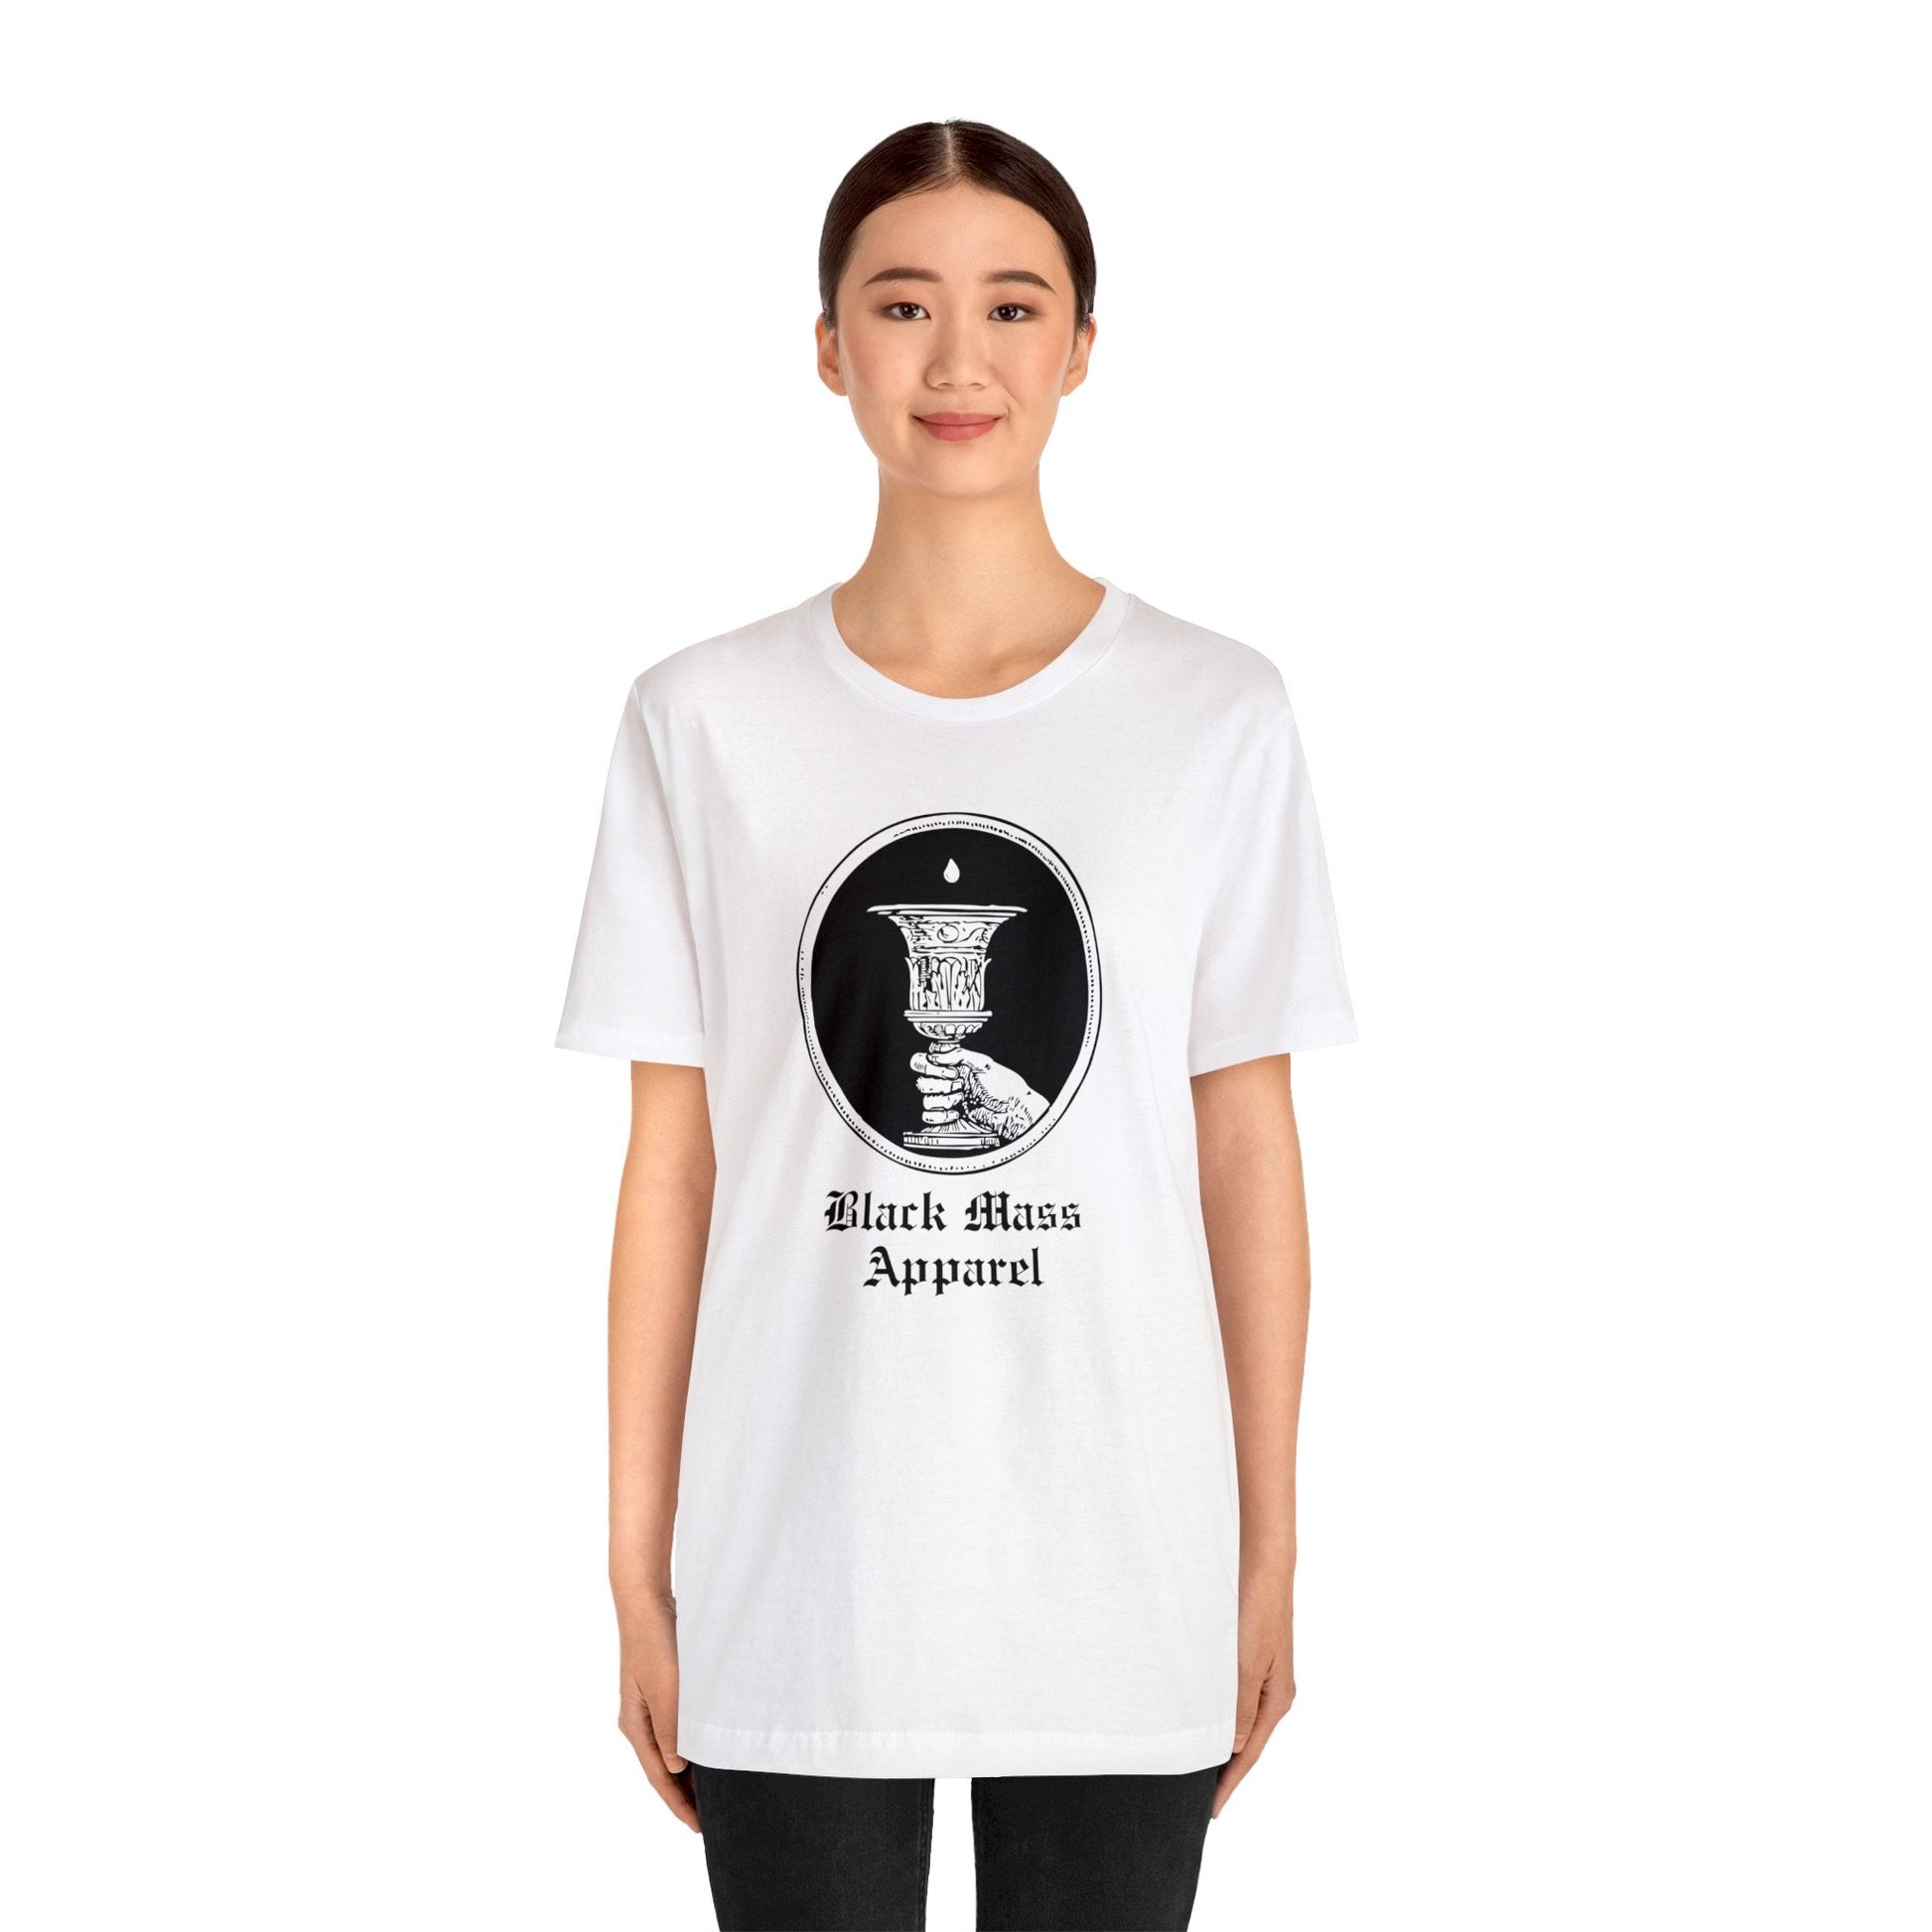 Black Mass Apparel - Chalice - Black Mass Apparel - T-Shirt